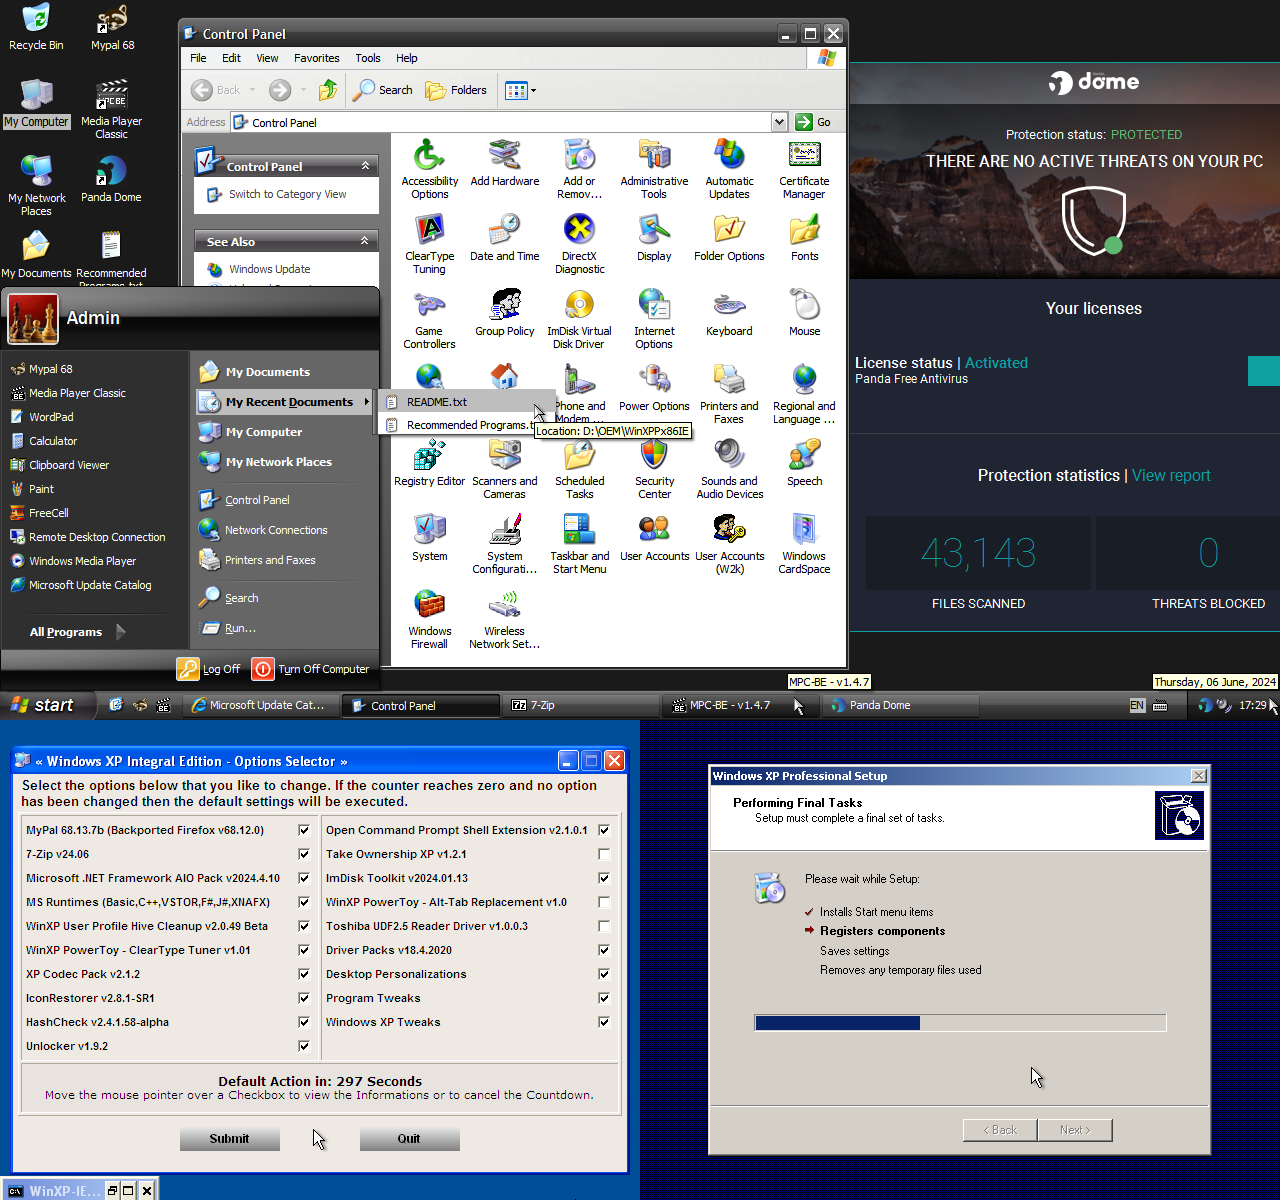 Windows%20XP%20Integral%20Edition%20-%20Screenshots%20(Installation,%20Desktop,%20Malware%20Scan).png